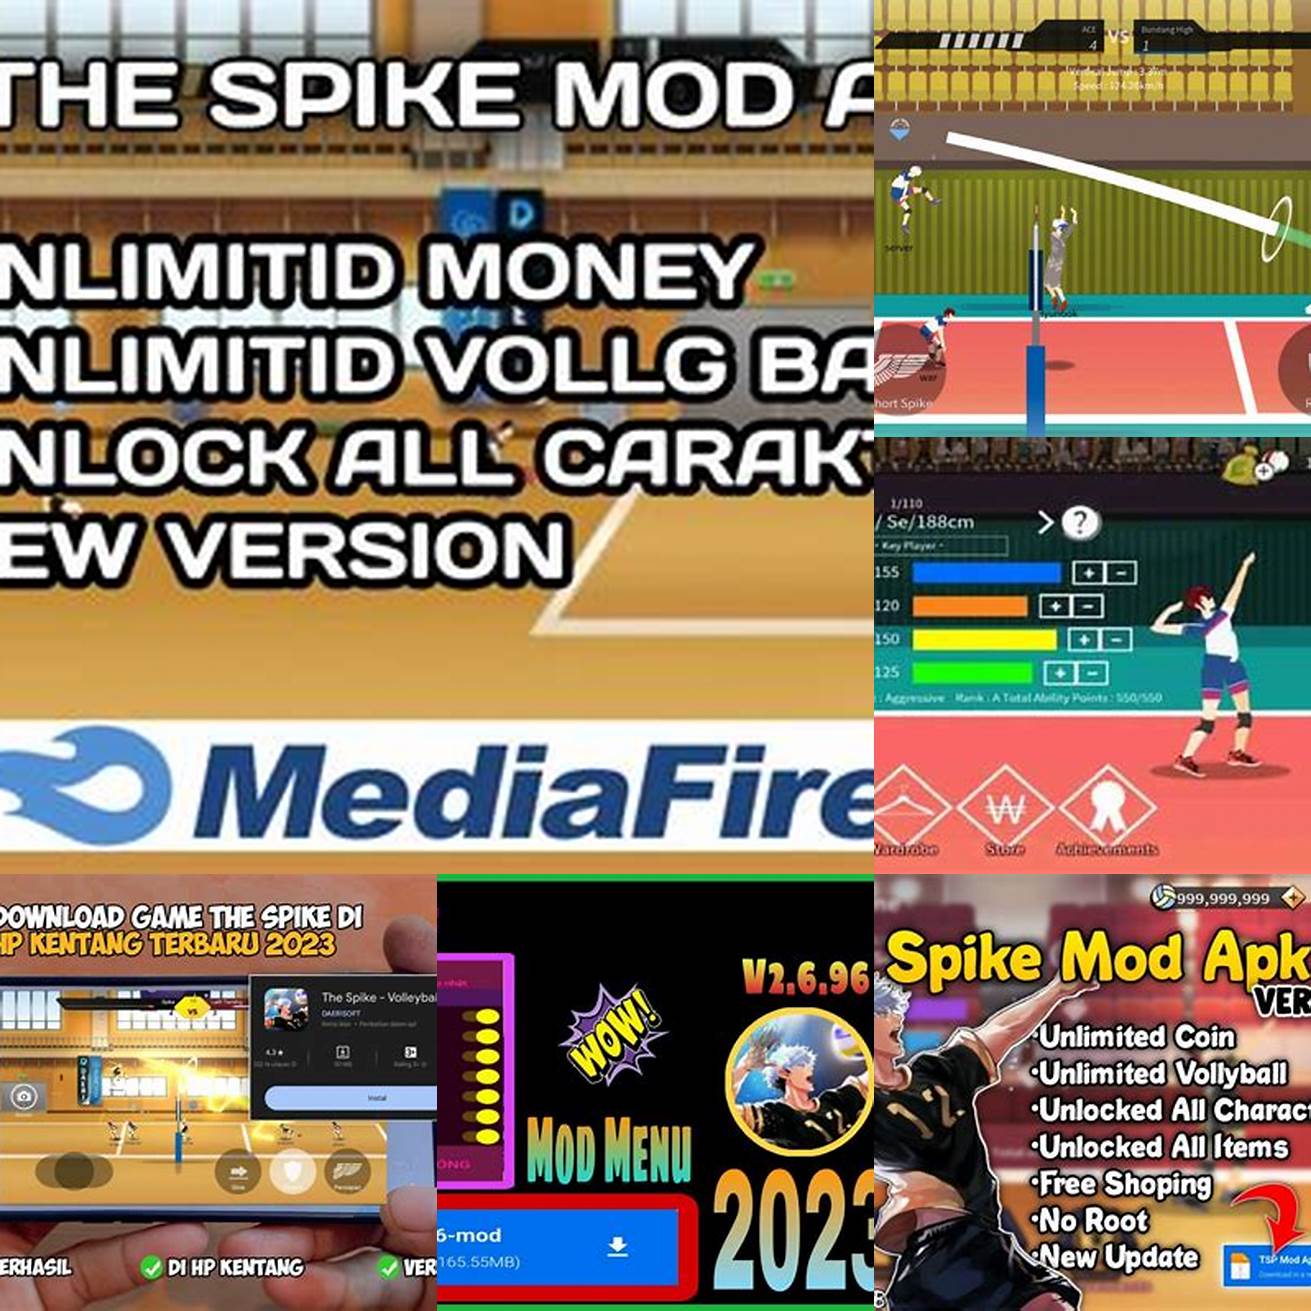 Langkah-langkah untuk menginstal The Spike Mod Apk 151